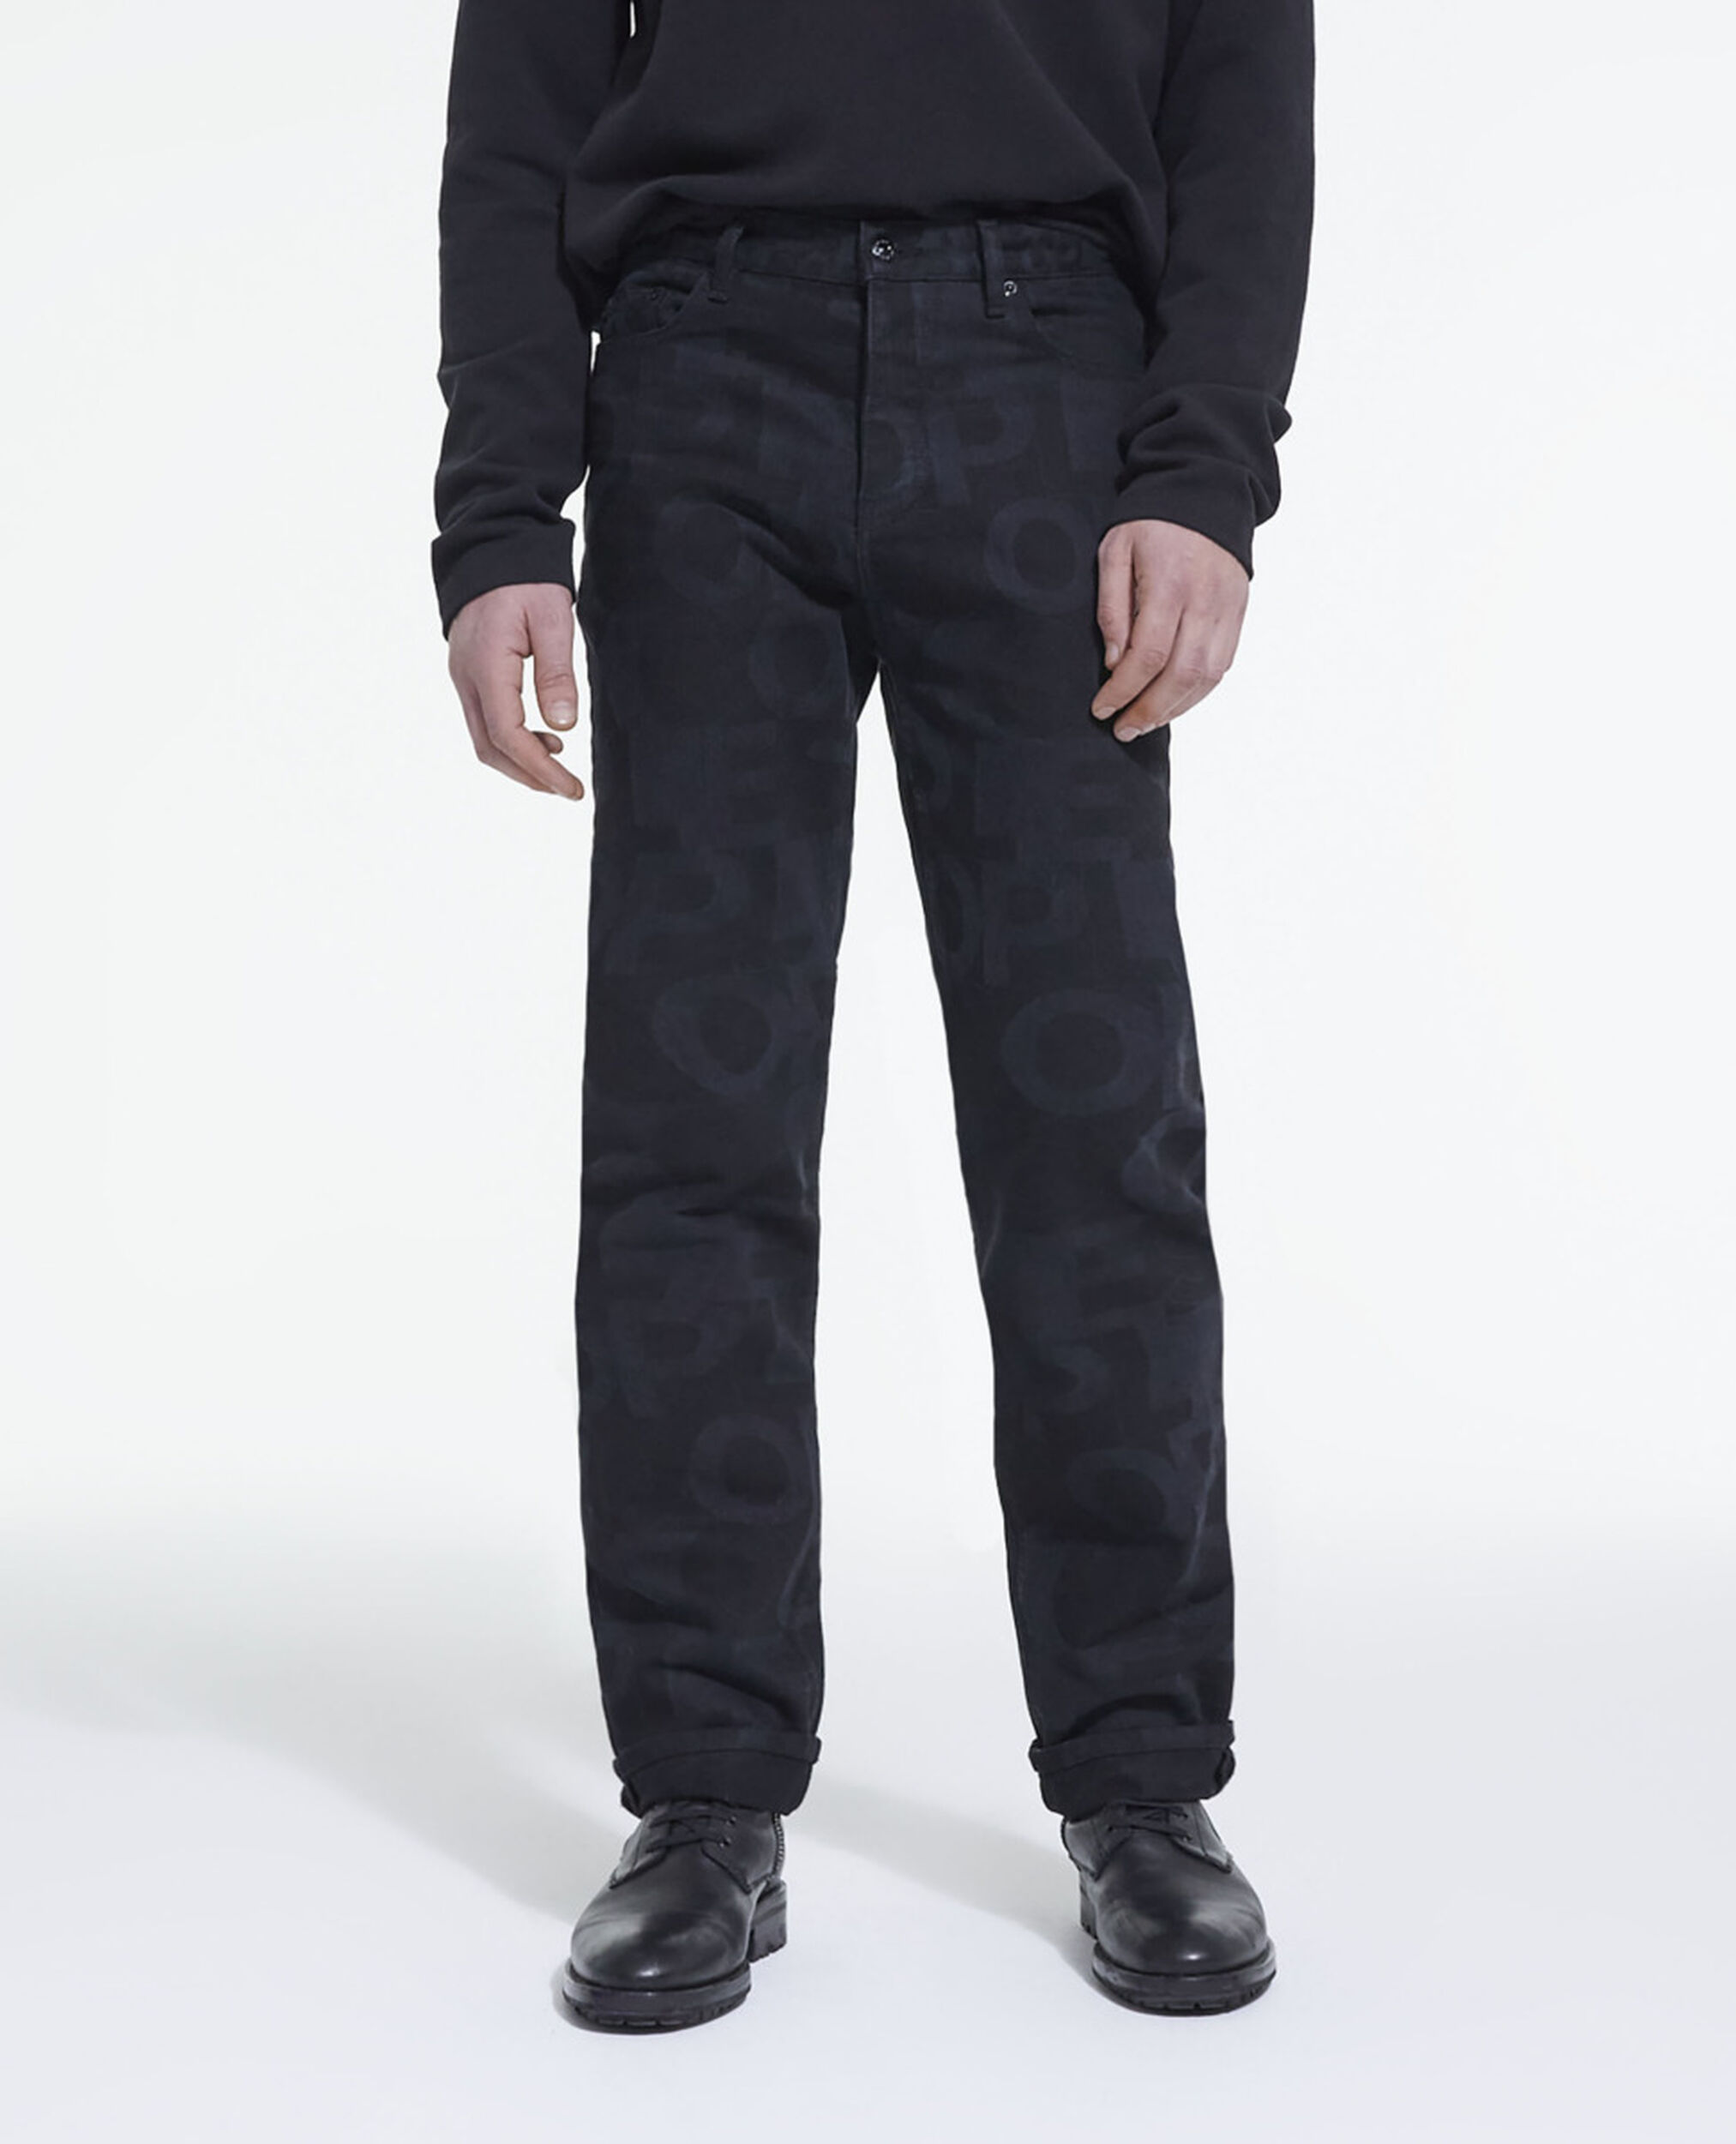 Jeans mit geradem Bein und The Kooples Logo, BLACK WASHED, hi-res image number null